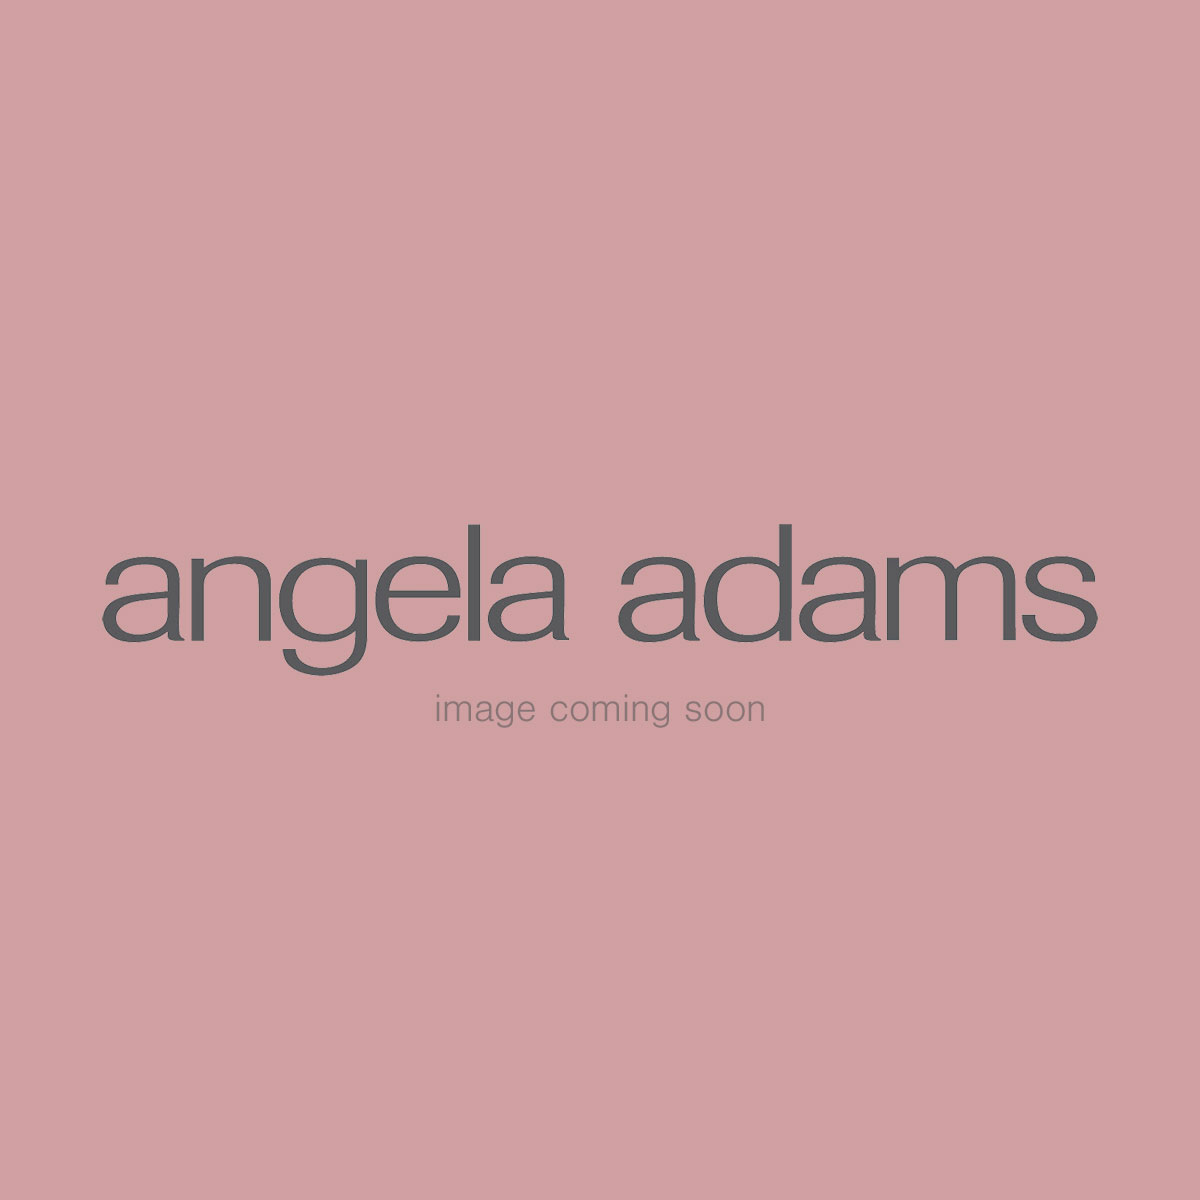 angela adams logo type on a rose pink backdrop.